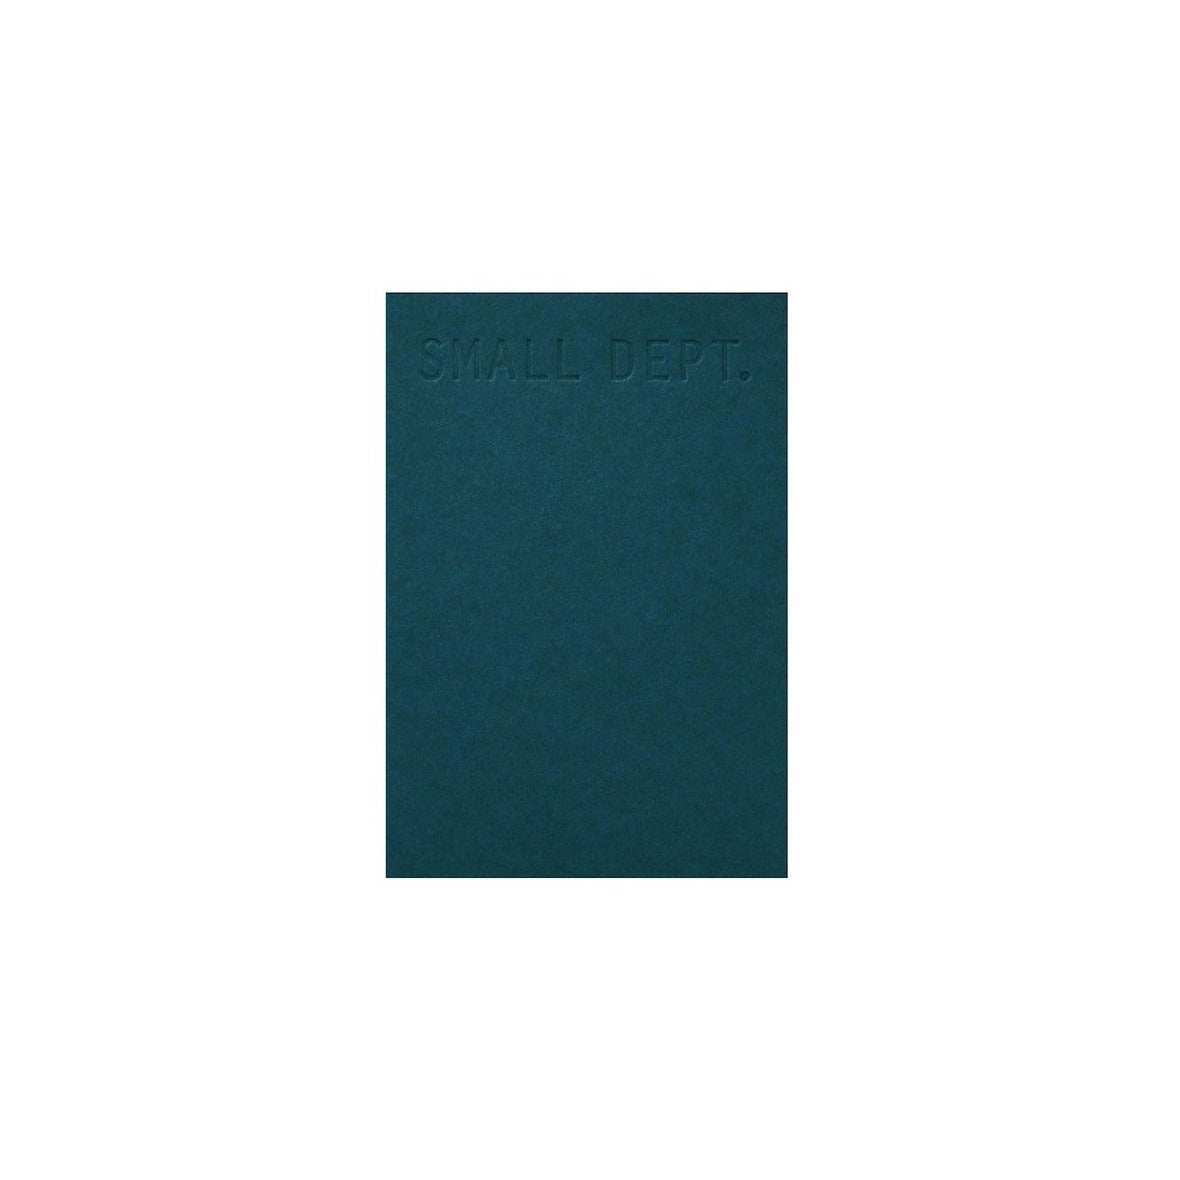 Planer & Notizbuch blaugrün | Trools Paper | Made in Seoul Südkorea